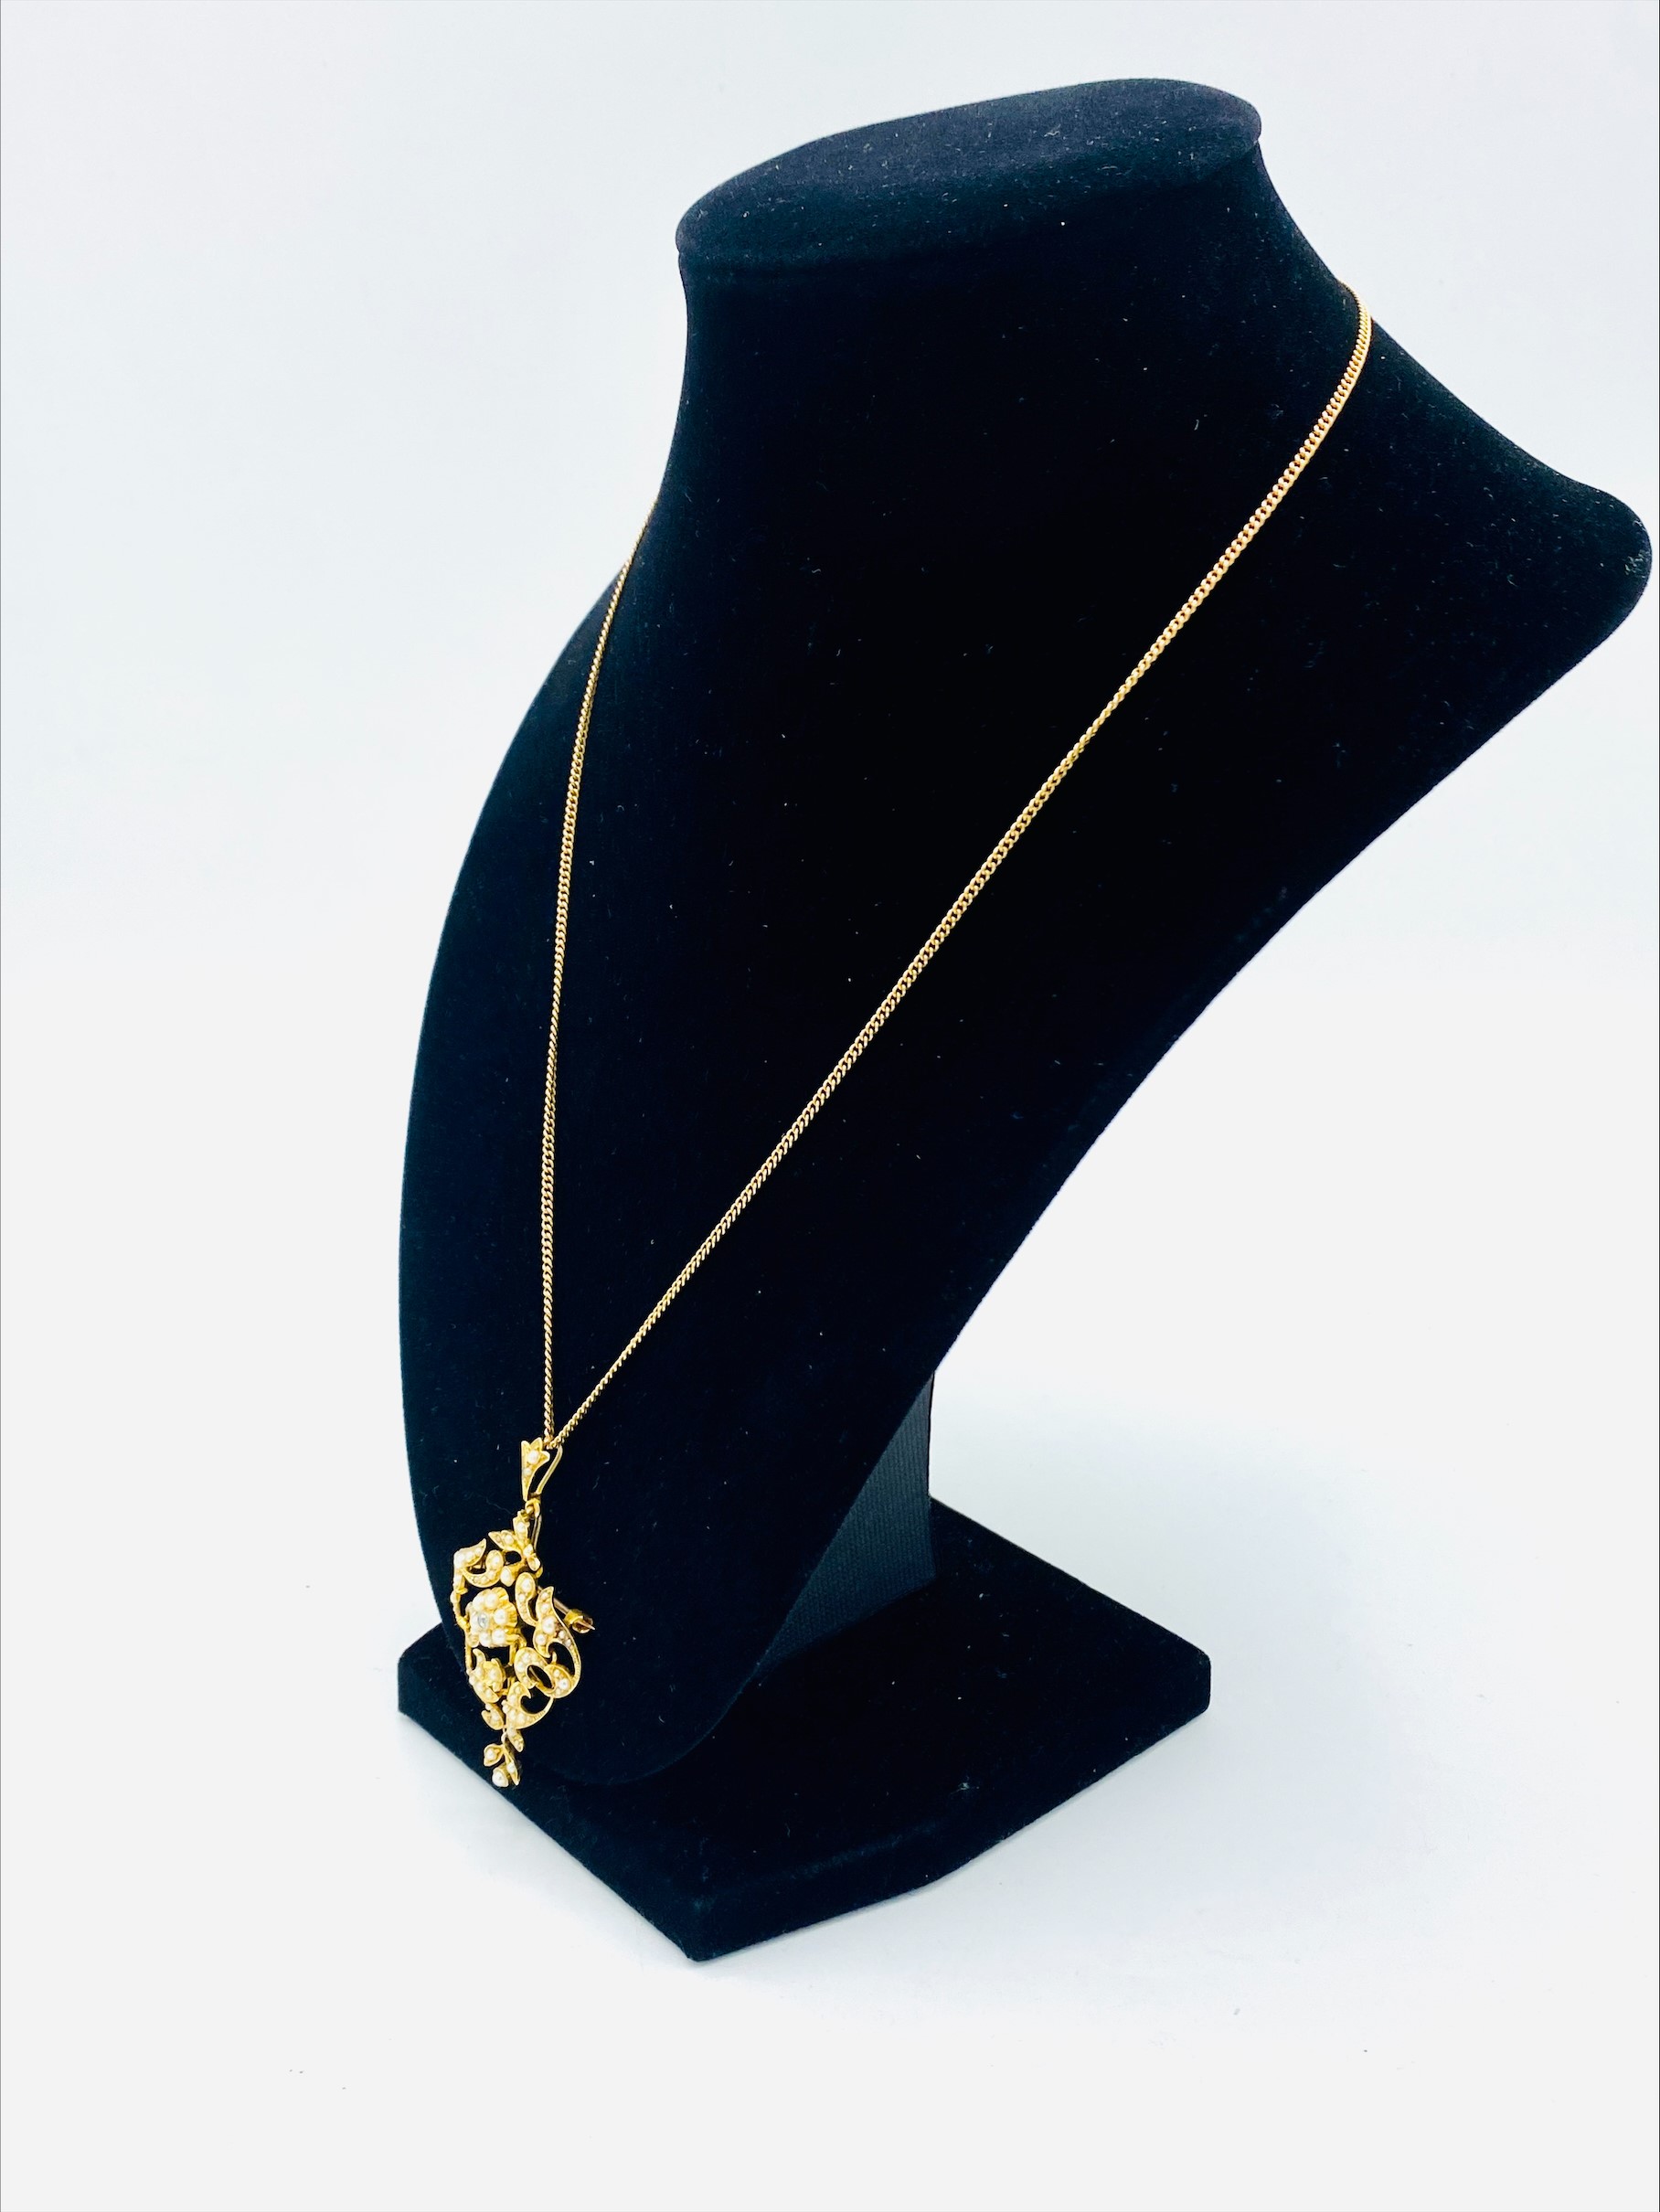 Edwardian 15ct gold lavalier necklace - Image 4 of 4